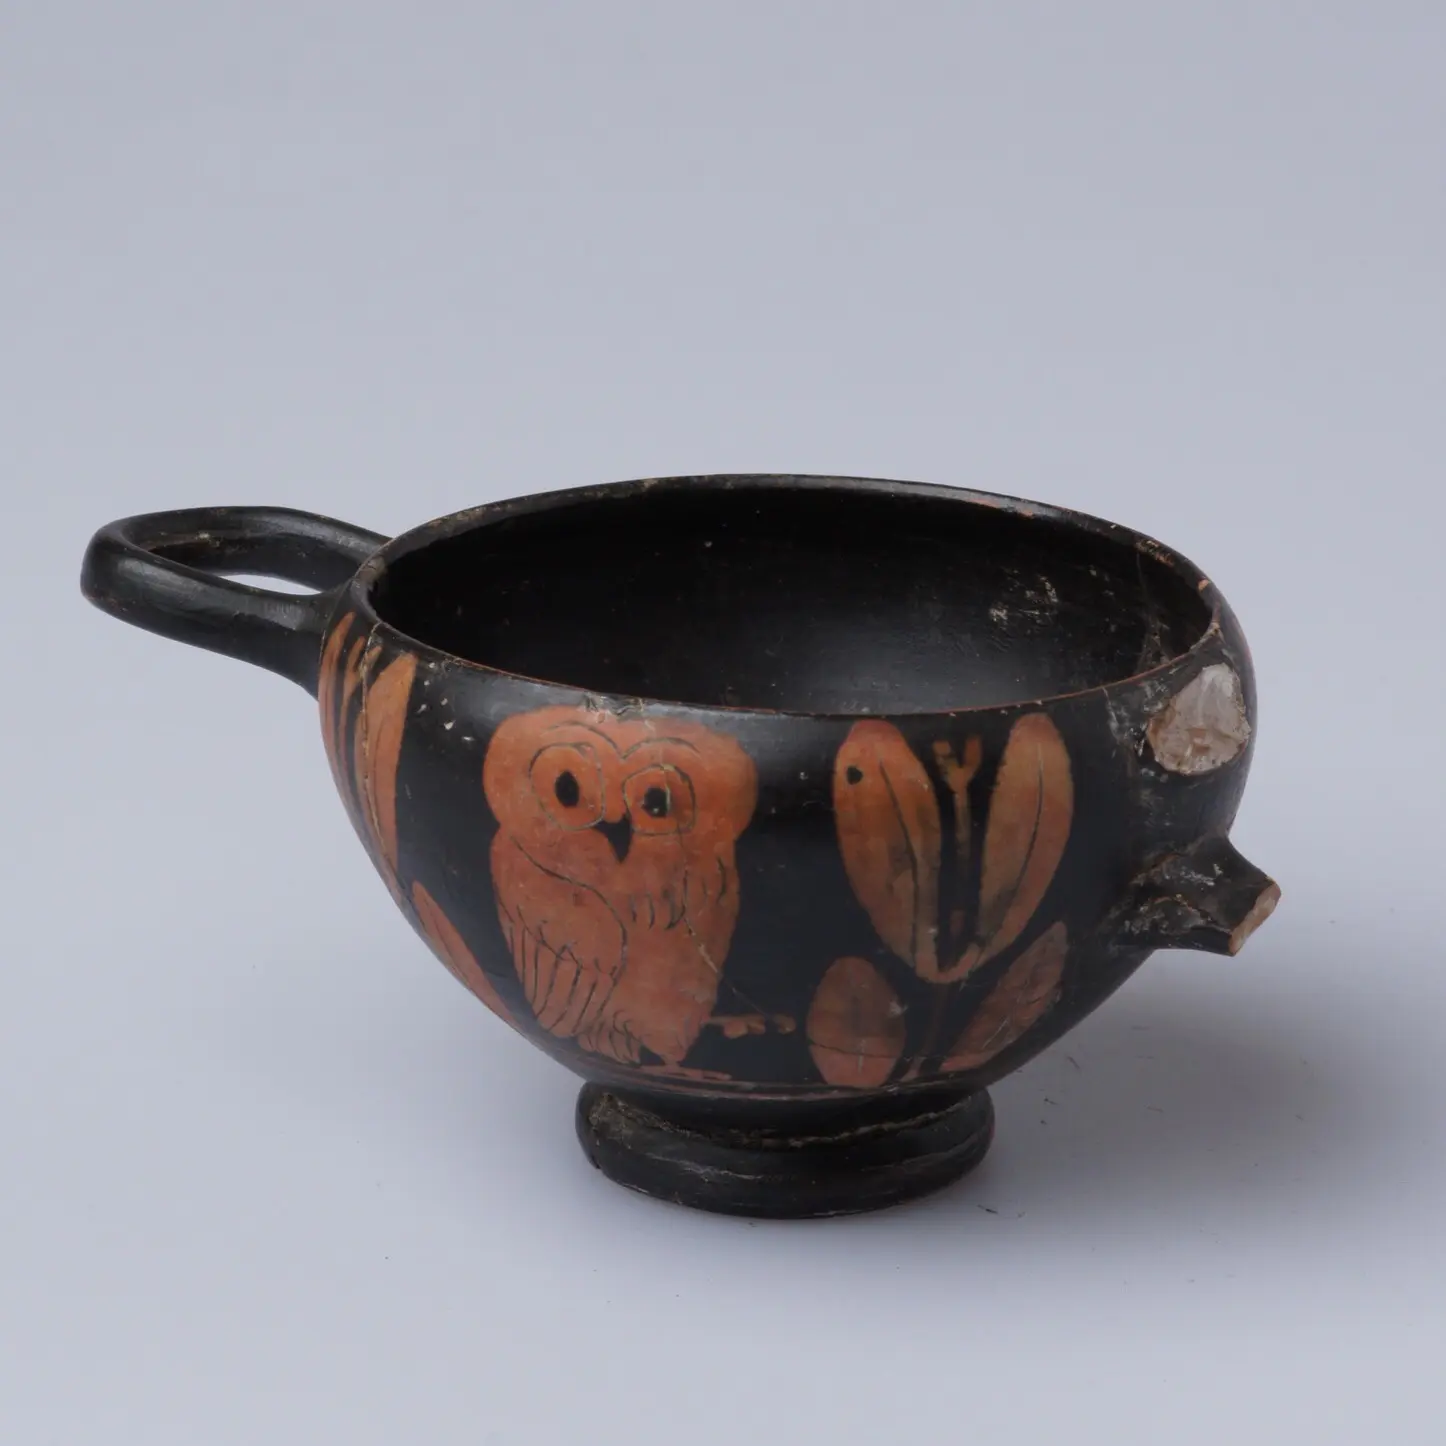 ceramics before restoration and missing handle